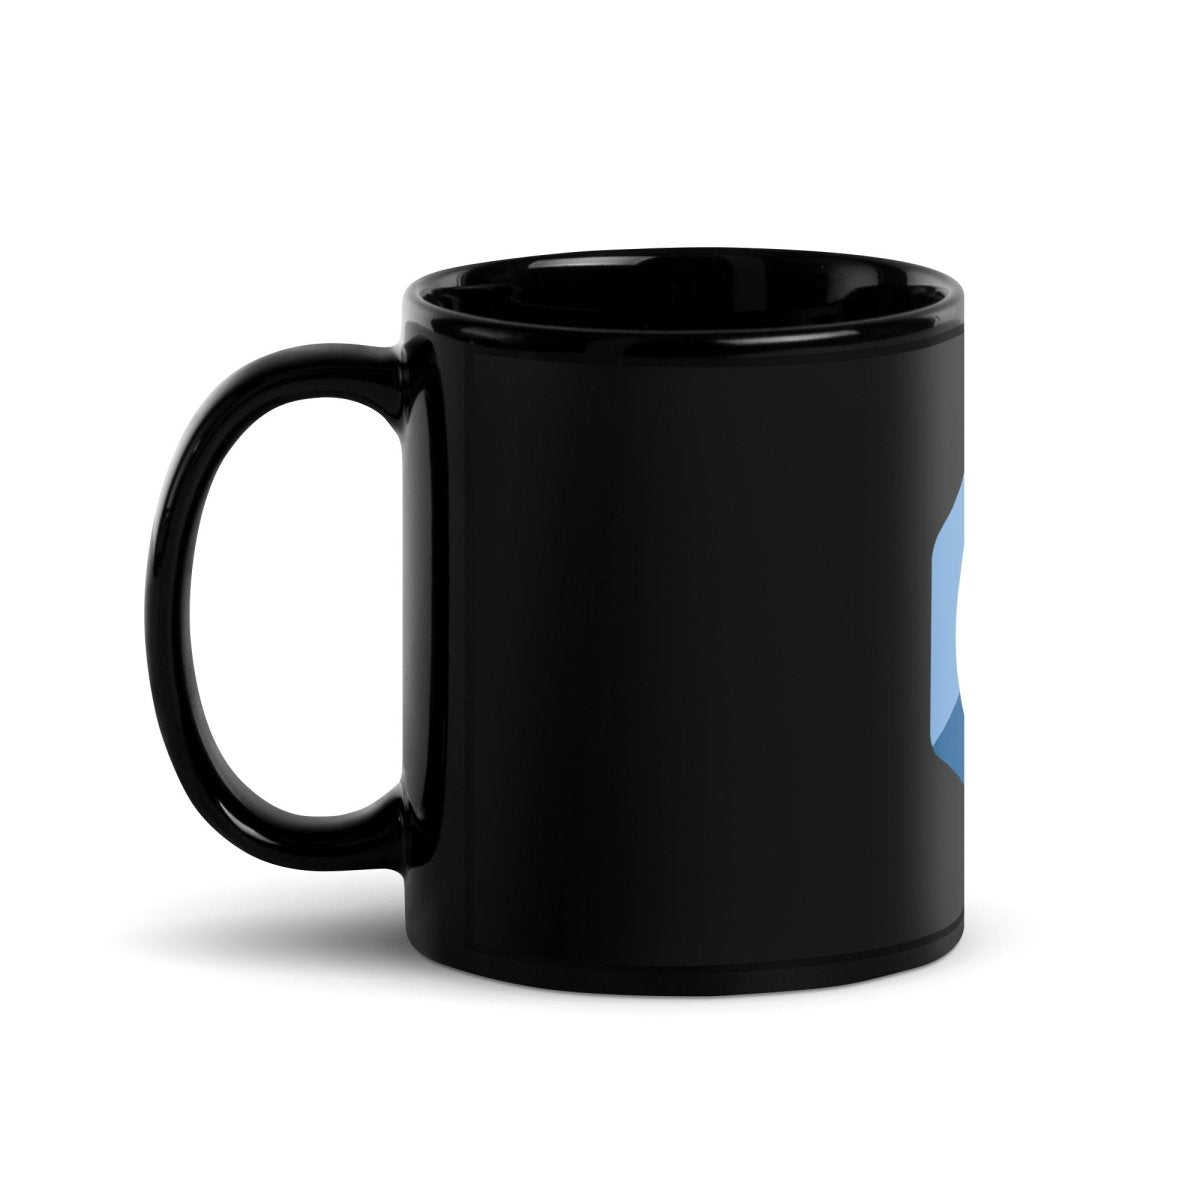 C++ Logo Black Glossy Mug - AI Store